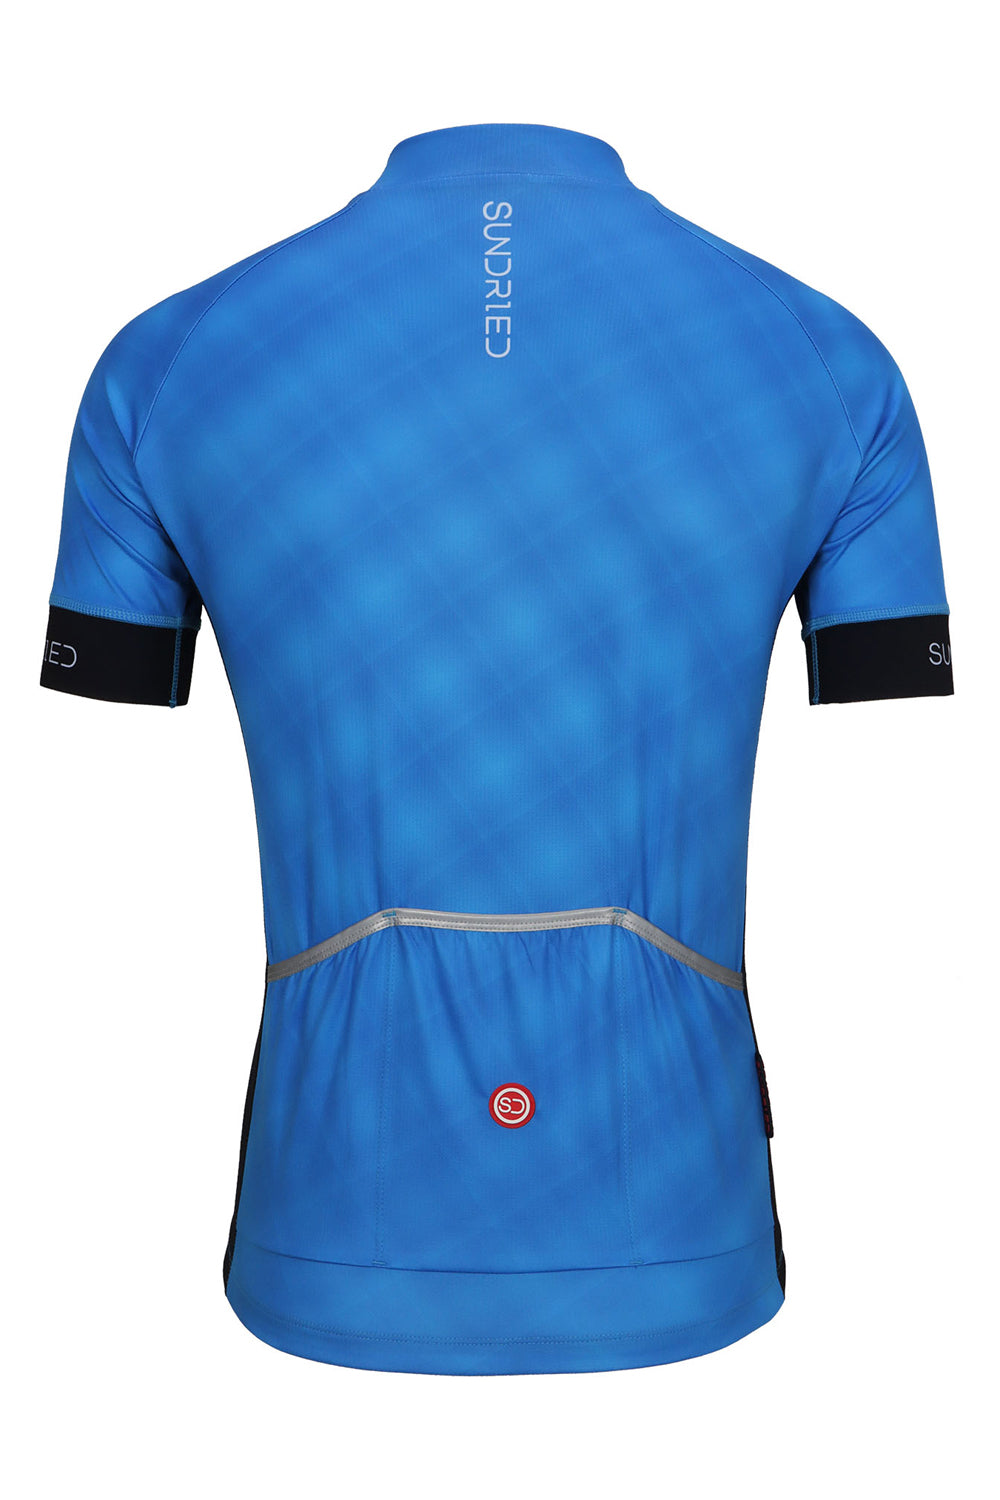 Sundried Plaid Men's Short Sleeve Training Cycle Jersey Short Sleeve Jersey Activewear